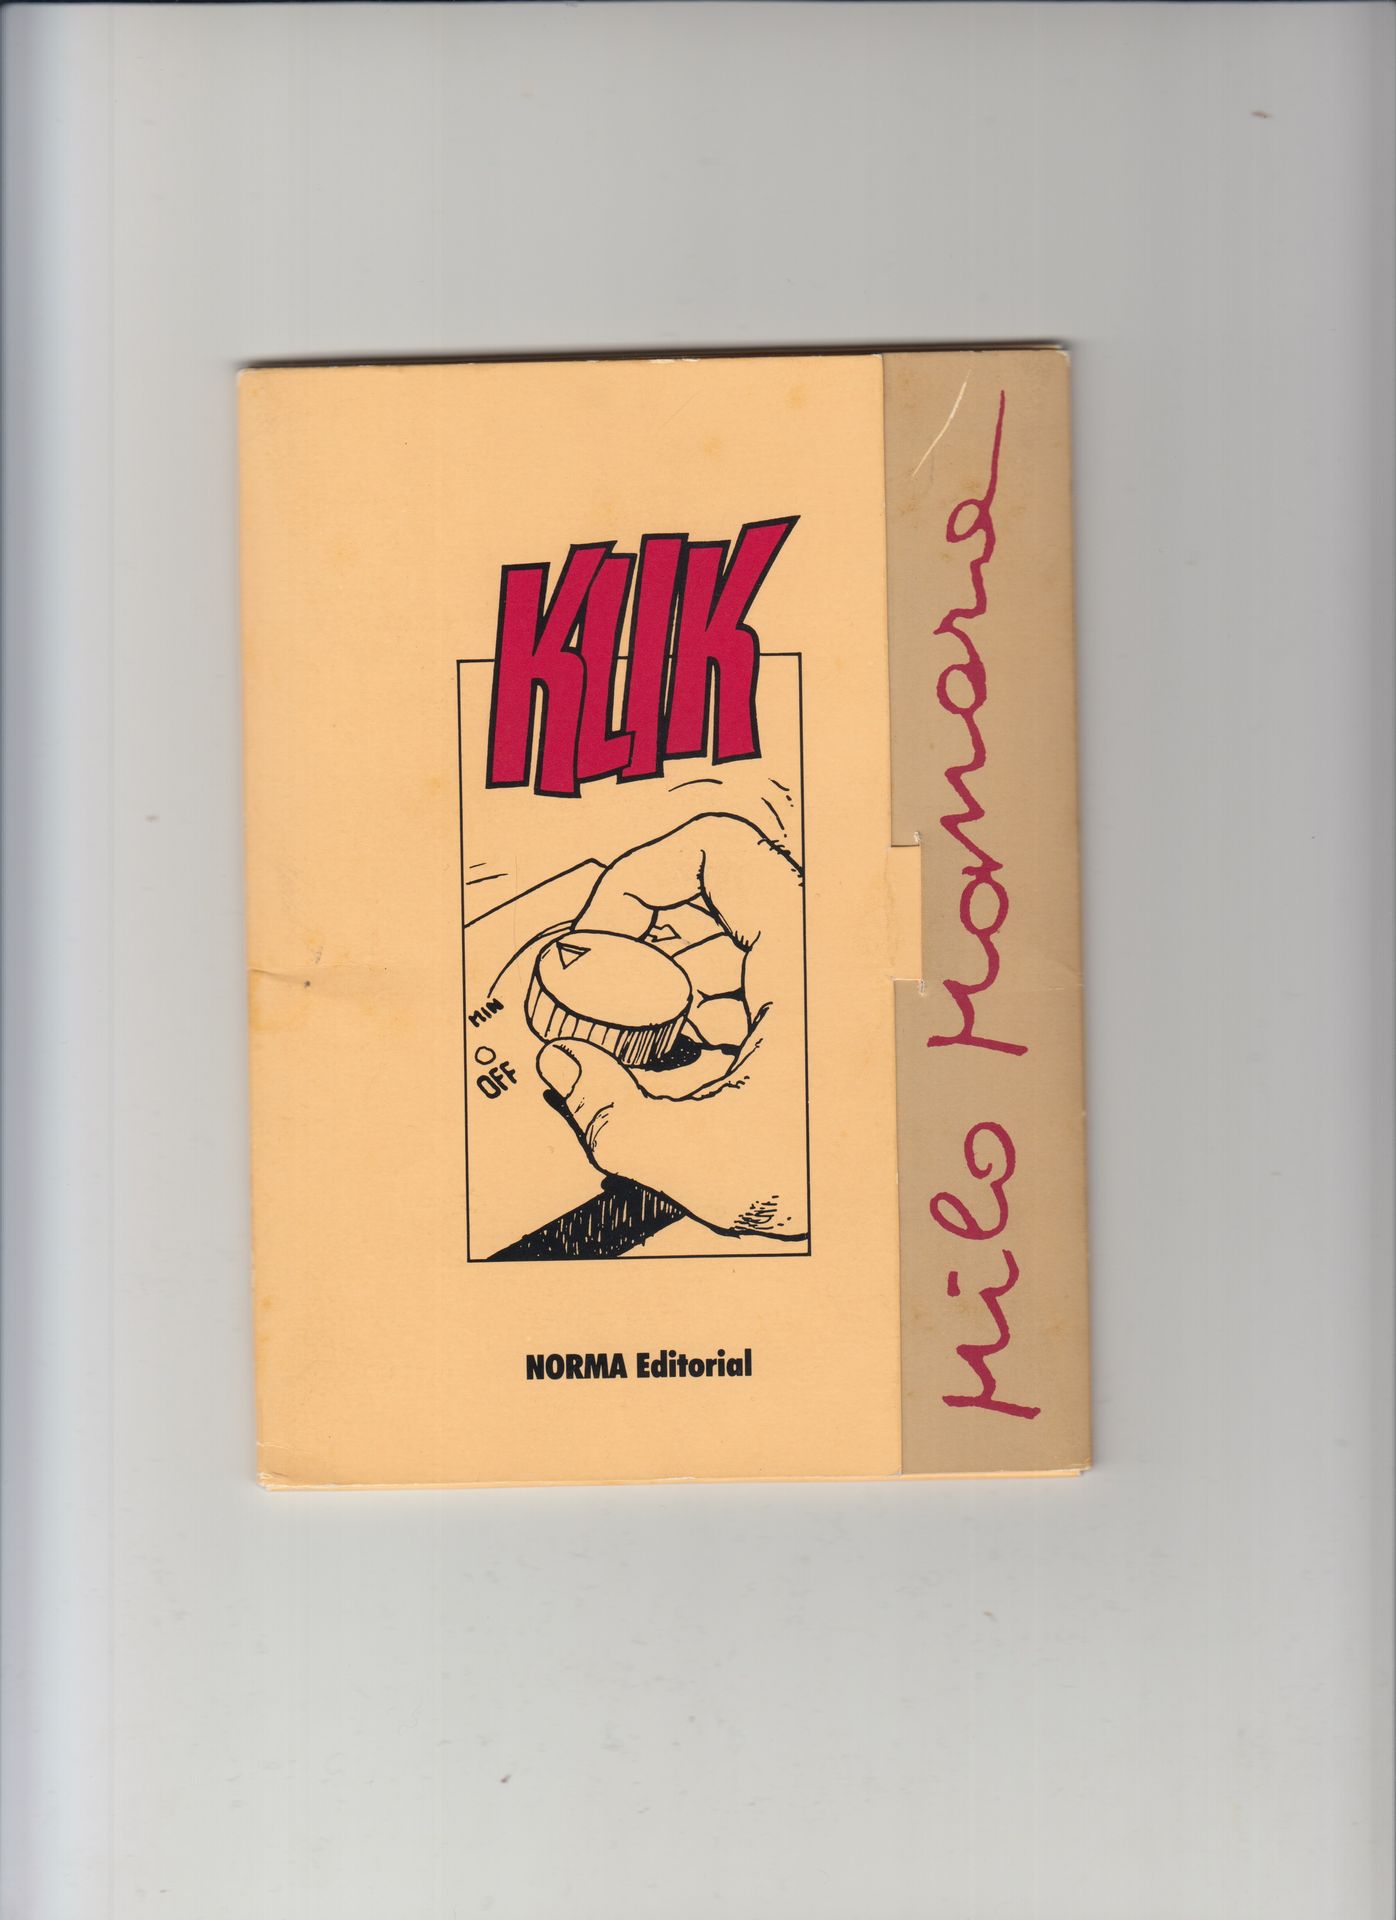 MANARA Klik portfolio. 

Complete with its 8 erotic cards.

Size : 17 x 13 cm. E&hellip;